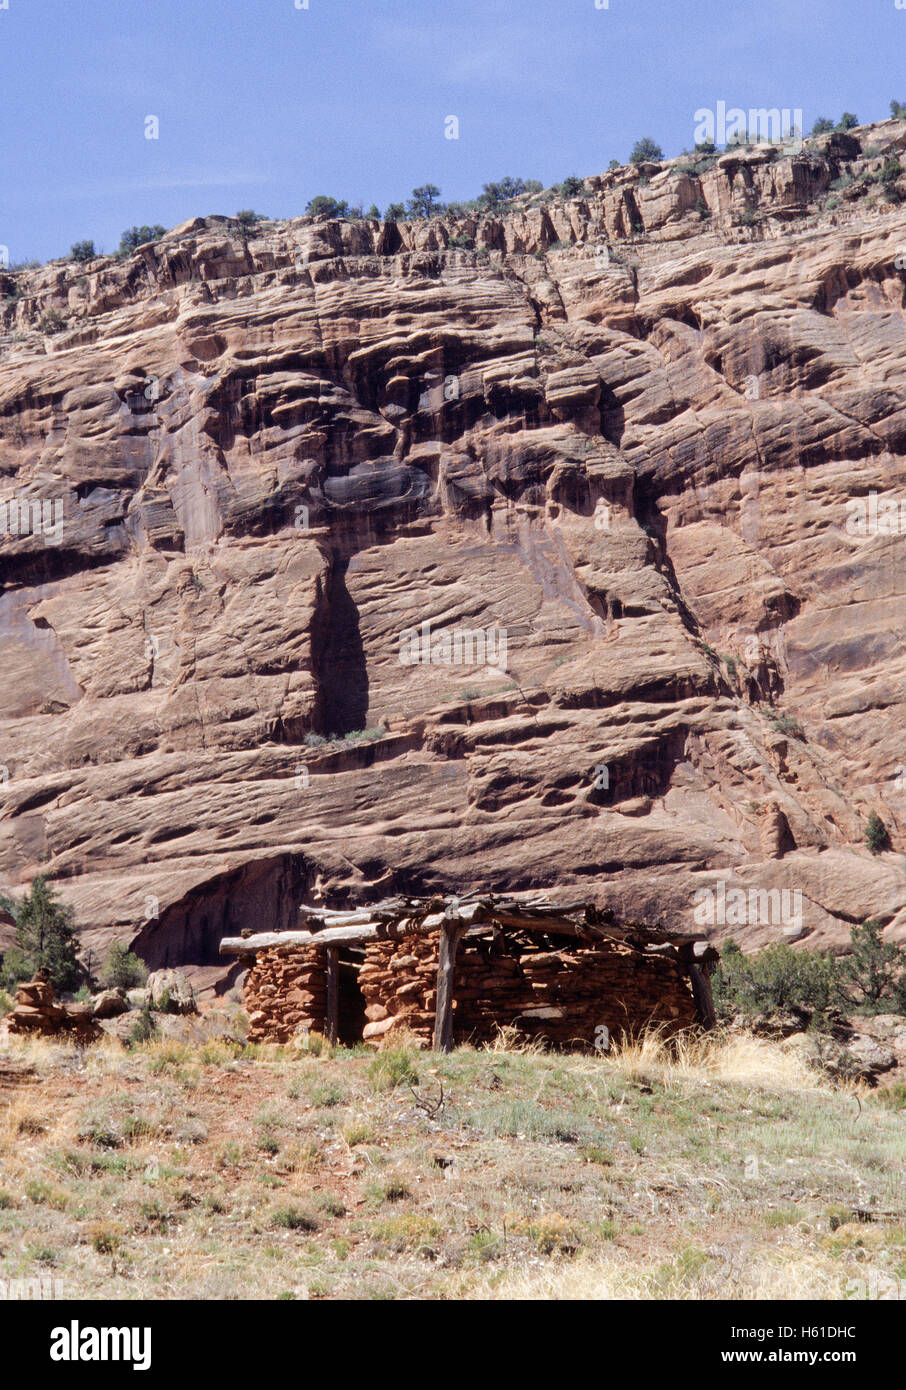 Navajo hogan or residence on canyon floor in Canyon de Chelly National Monument, Arizona Stock Photo